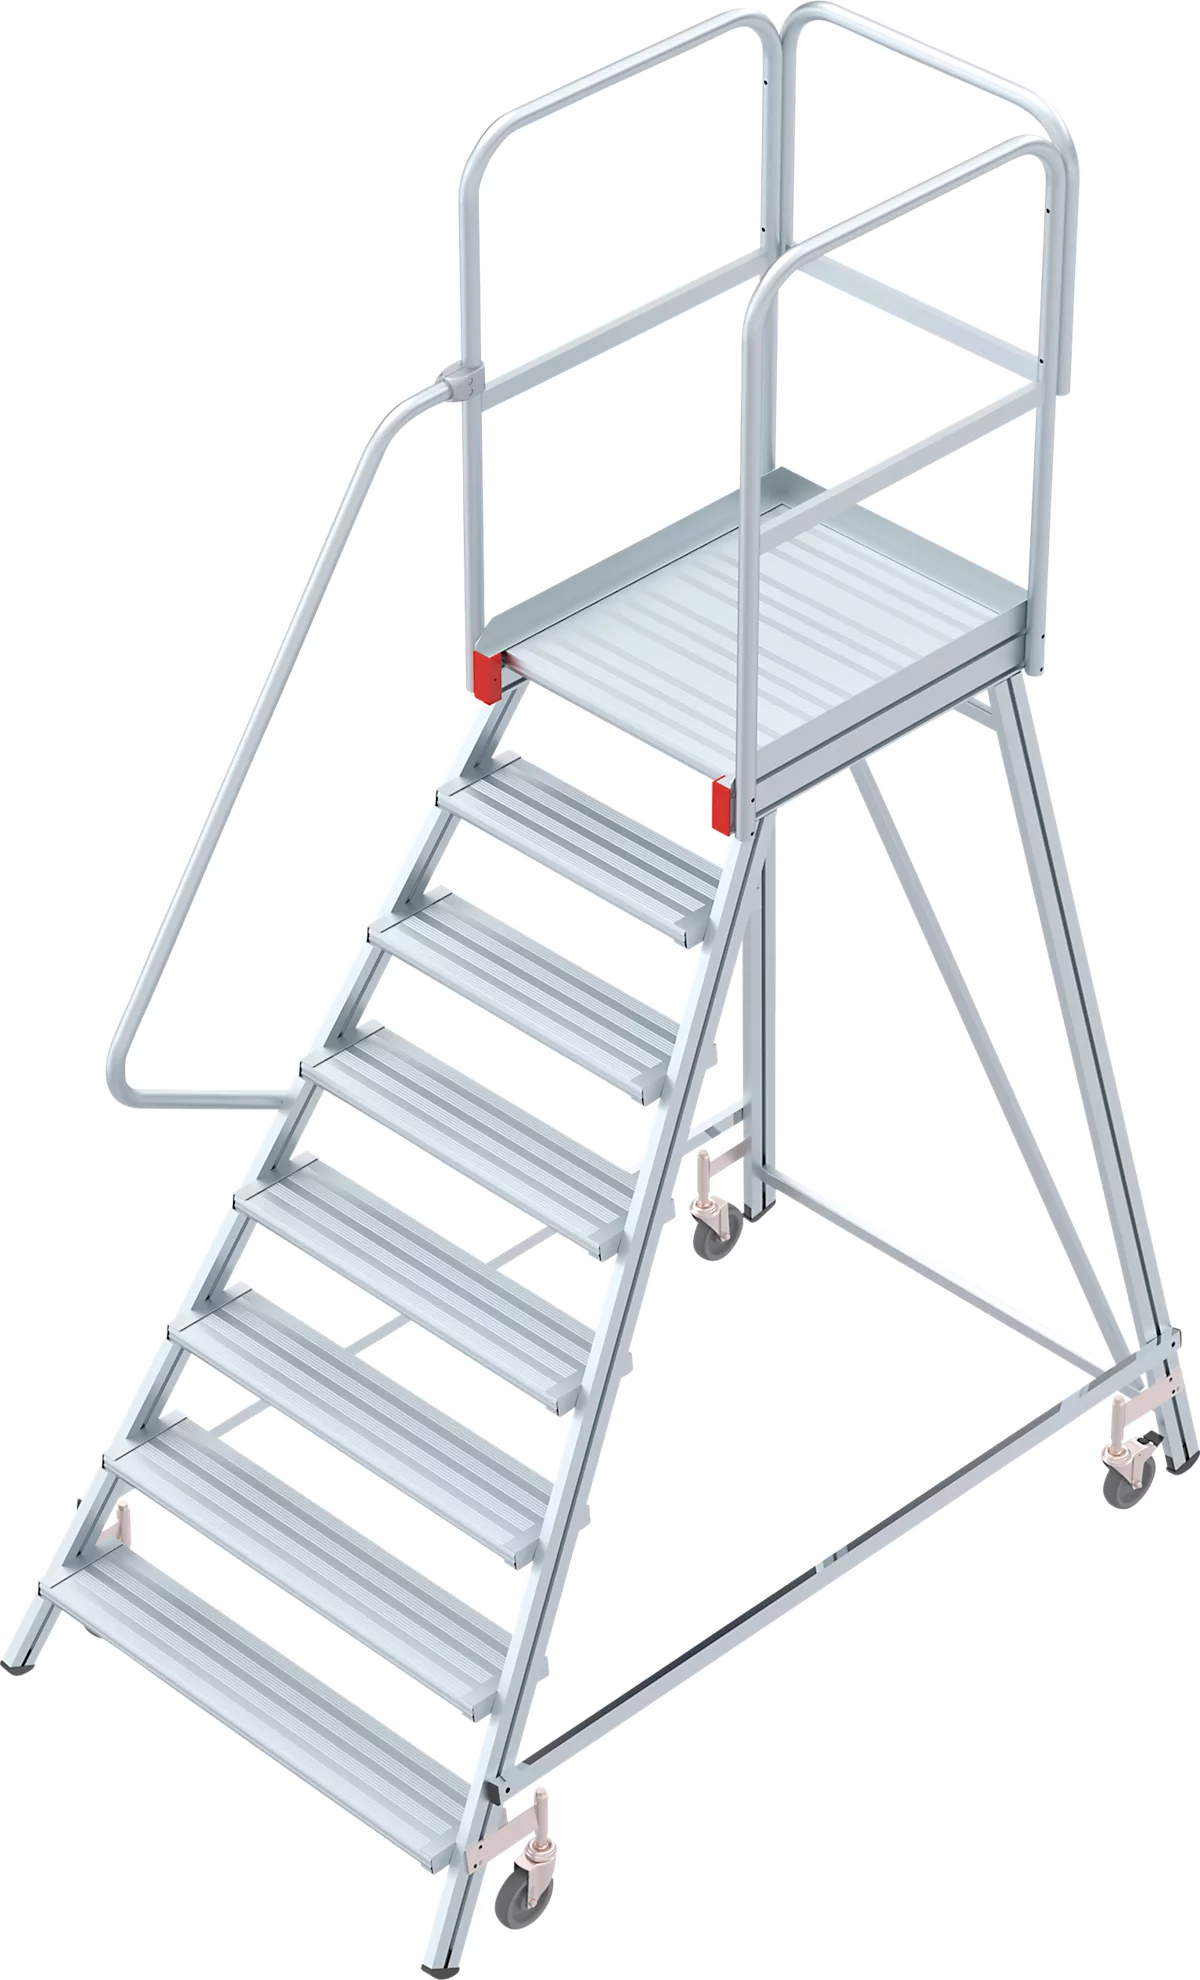 Escalera de plataforma de aluminio con ruedas, unilateral, 8 escalones